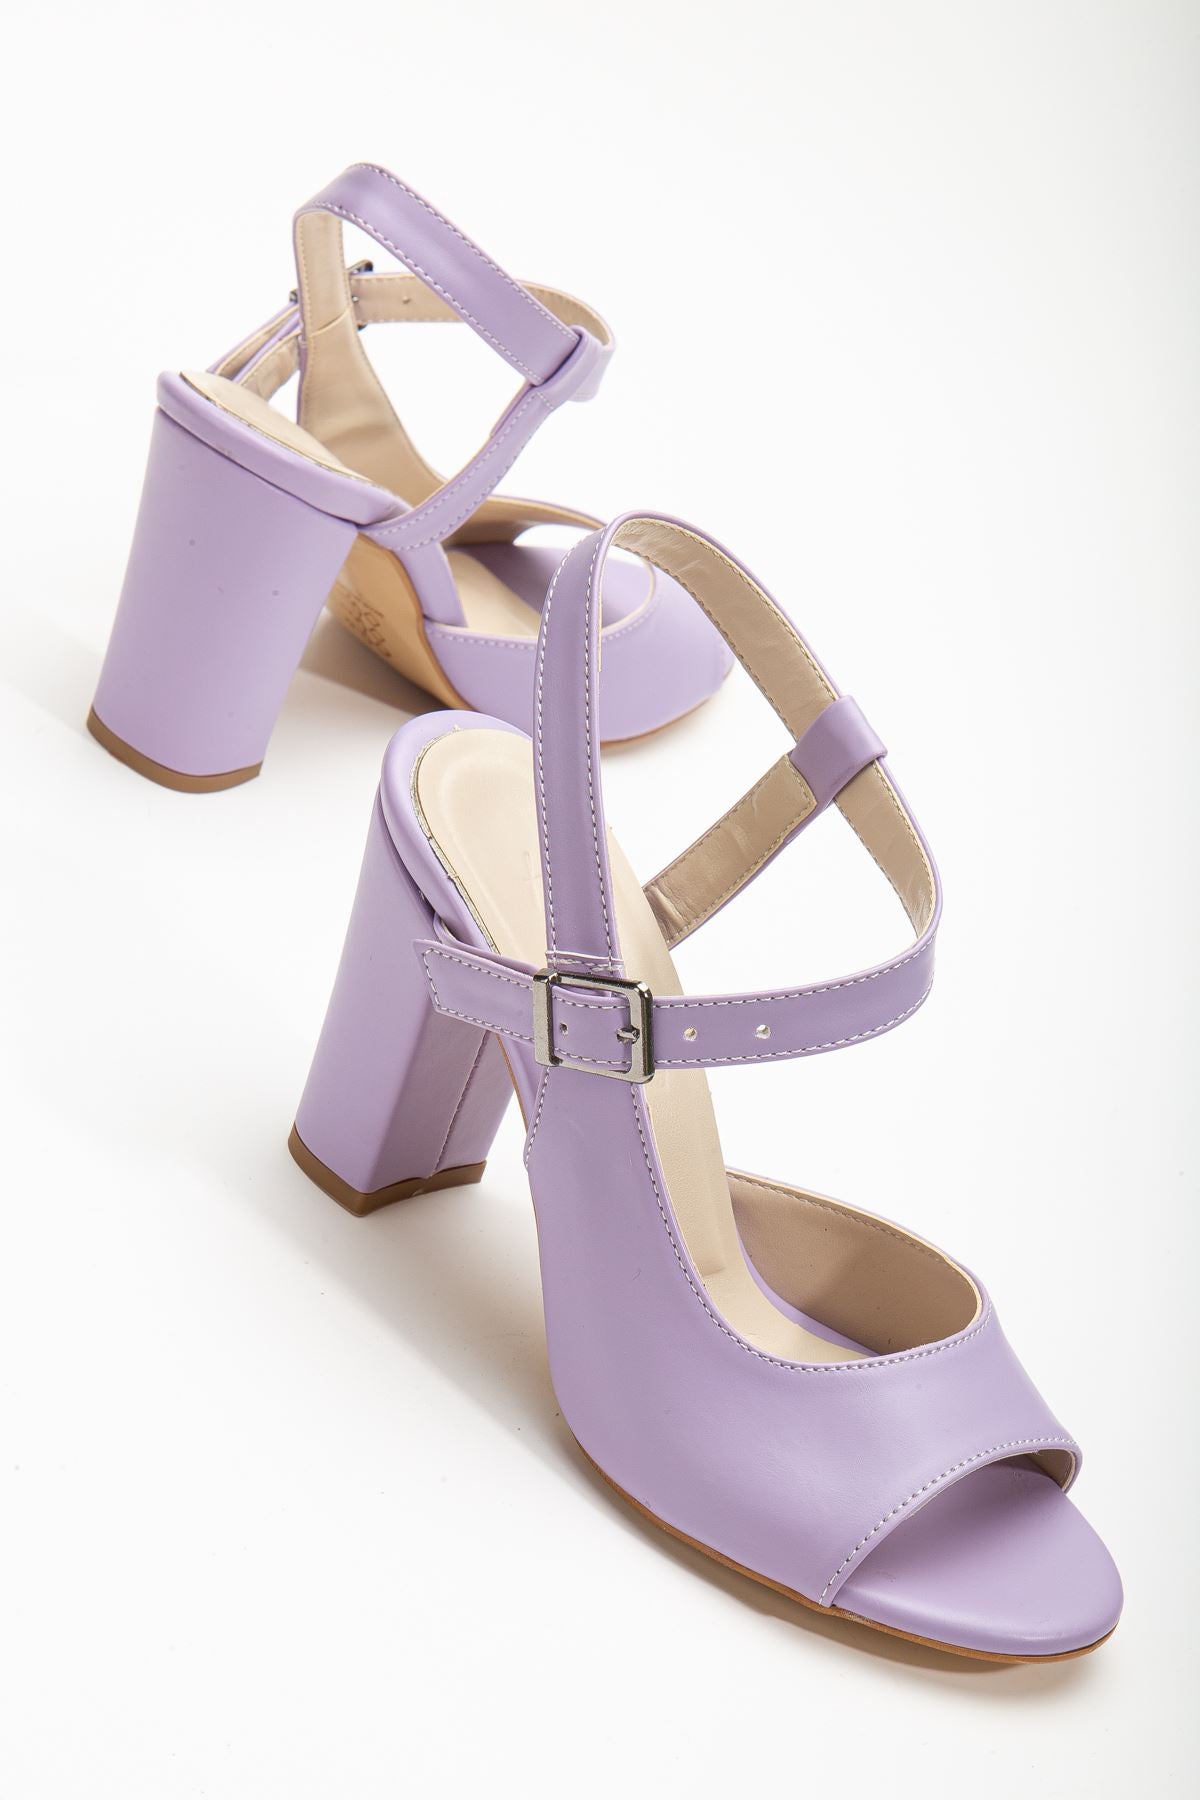 Lovisa Heeled Lilac Skin Women's Shoes - STREETMODE ™